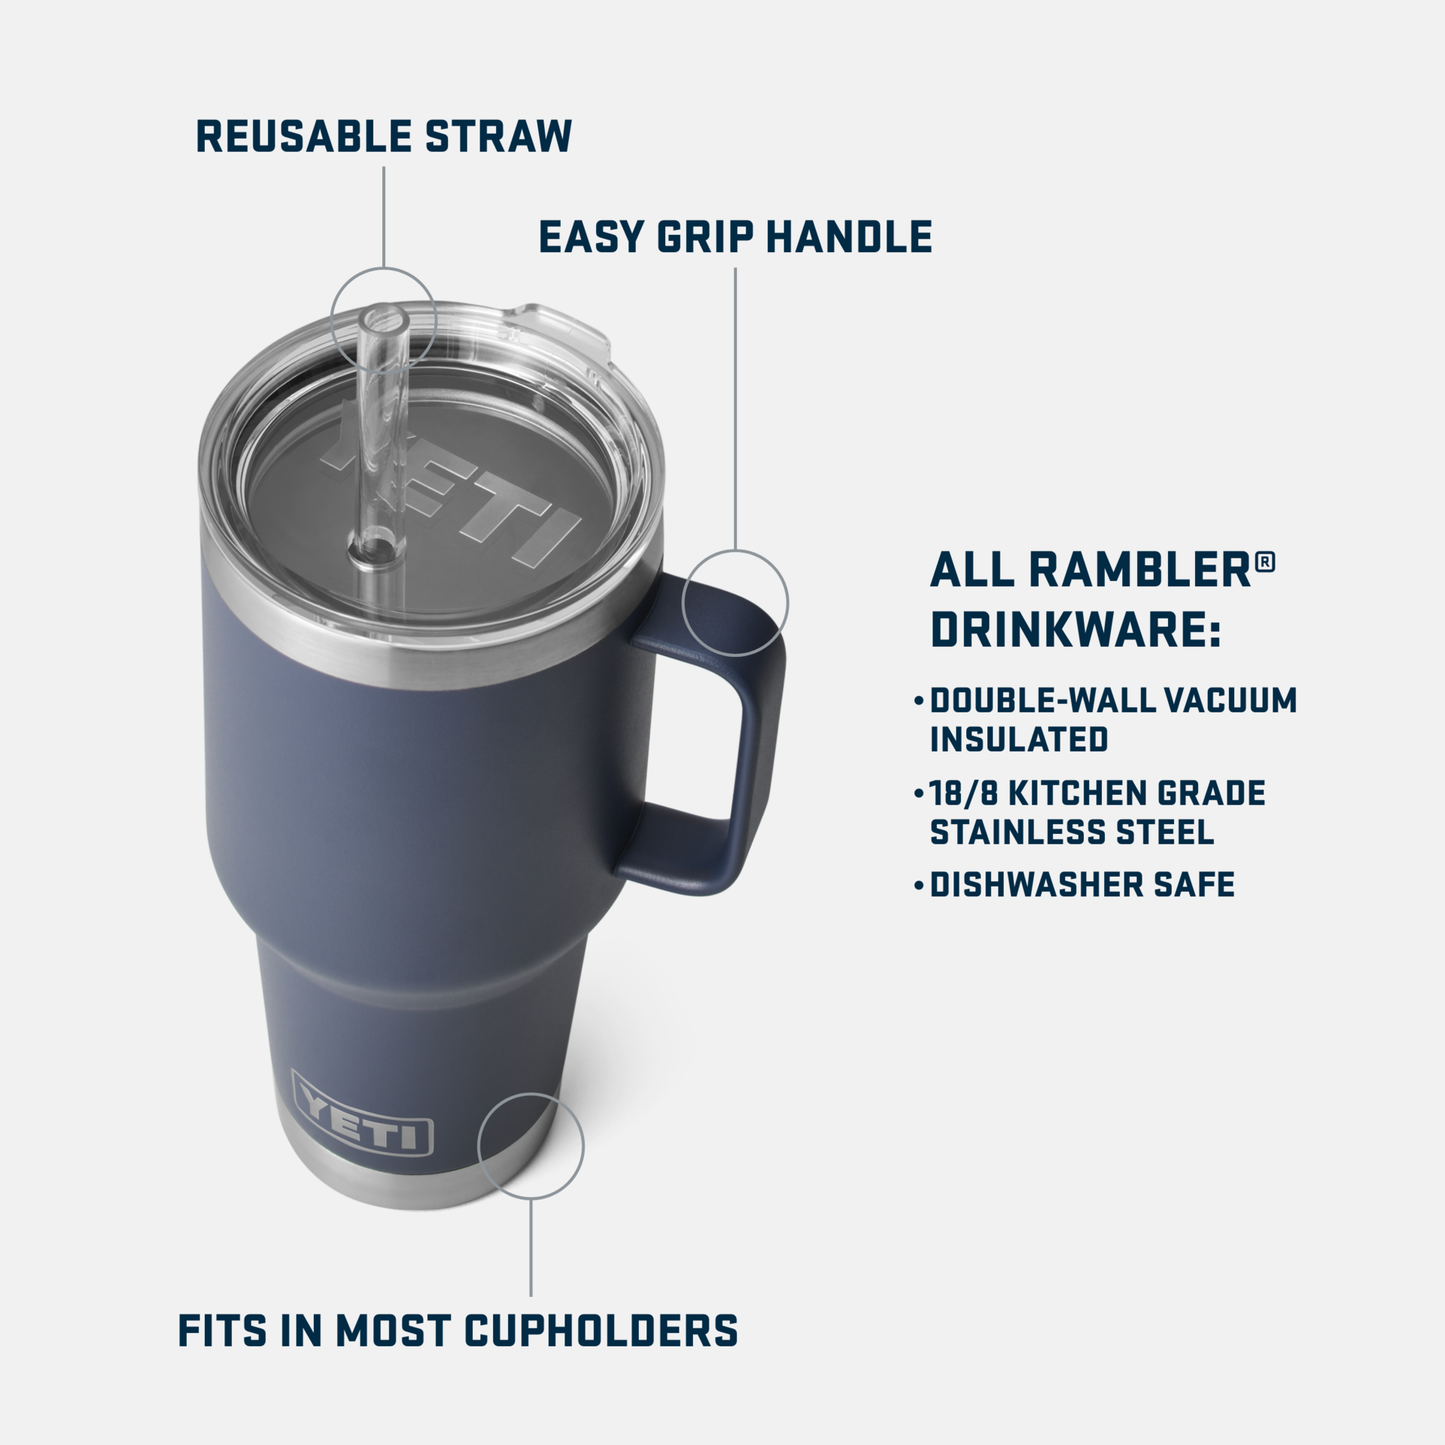 YETI Rambler® 35 oz (994 ml) Straw Mug Camp Green